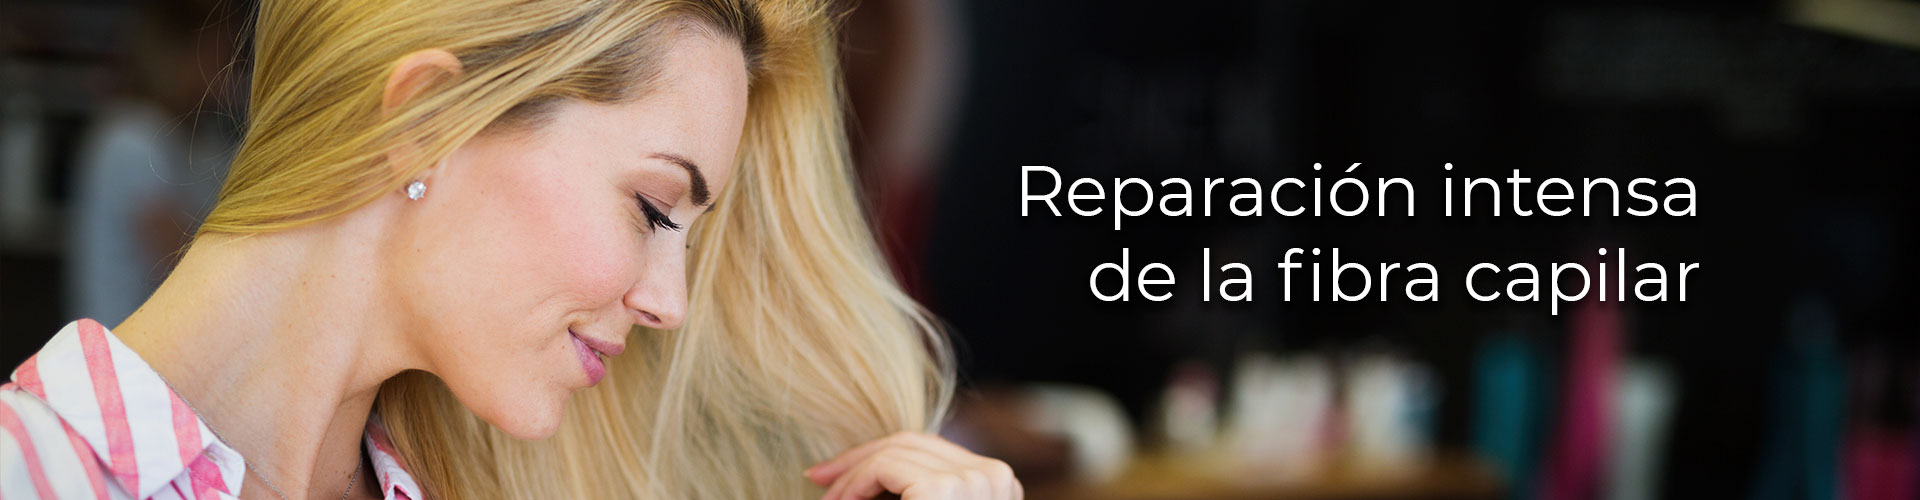 Cless salon reparacion capilar Mi Vitrina Bogota Colombia